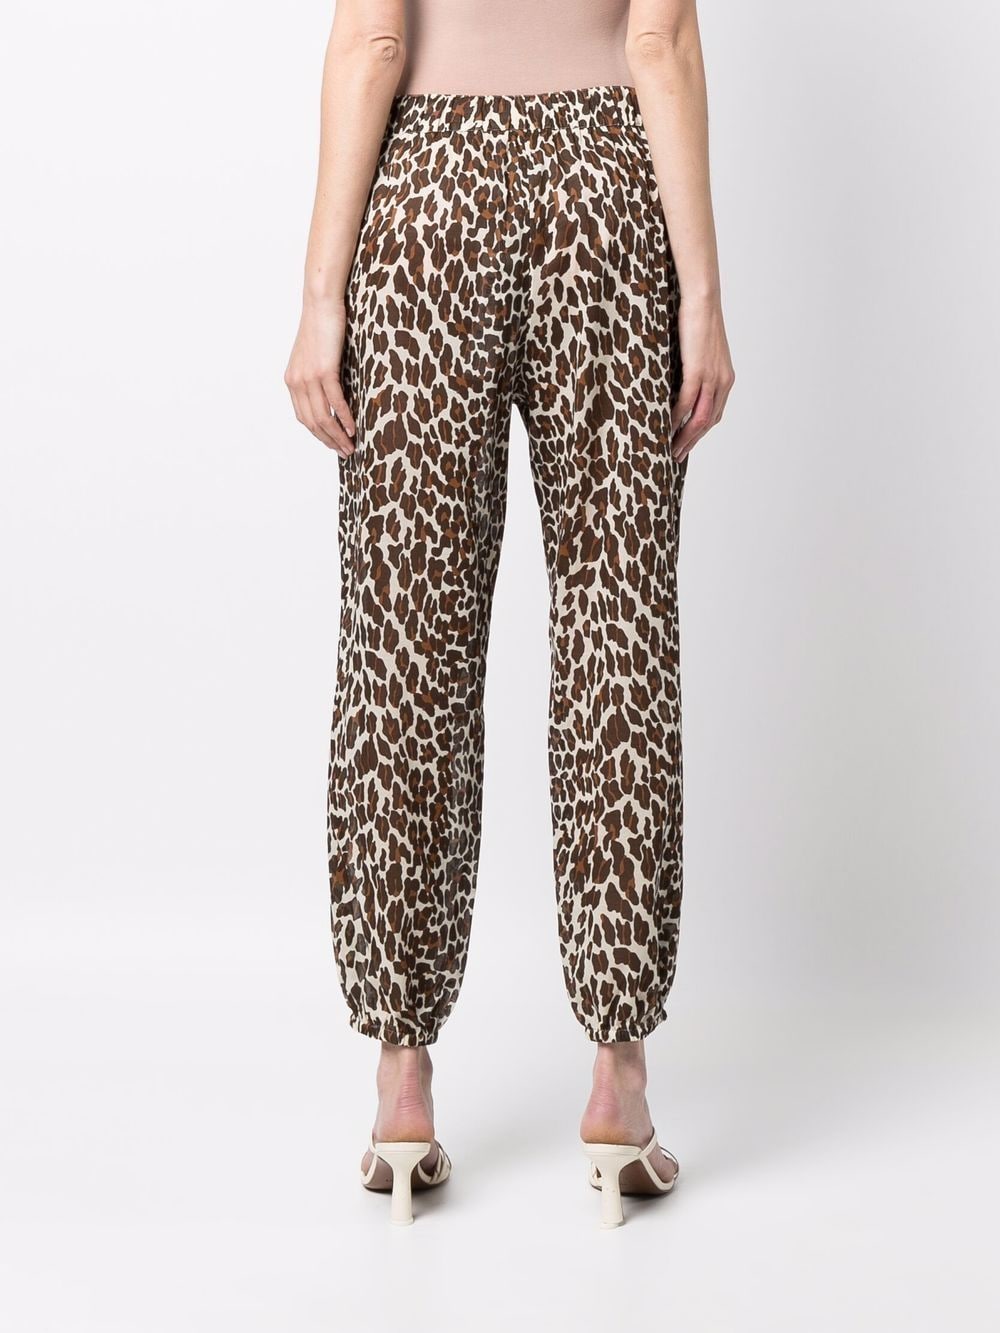 Tory Burch Leopard Print Trousers - Farfetch